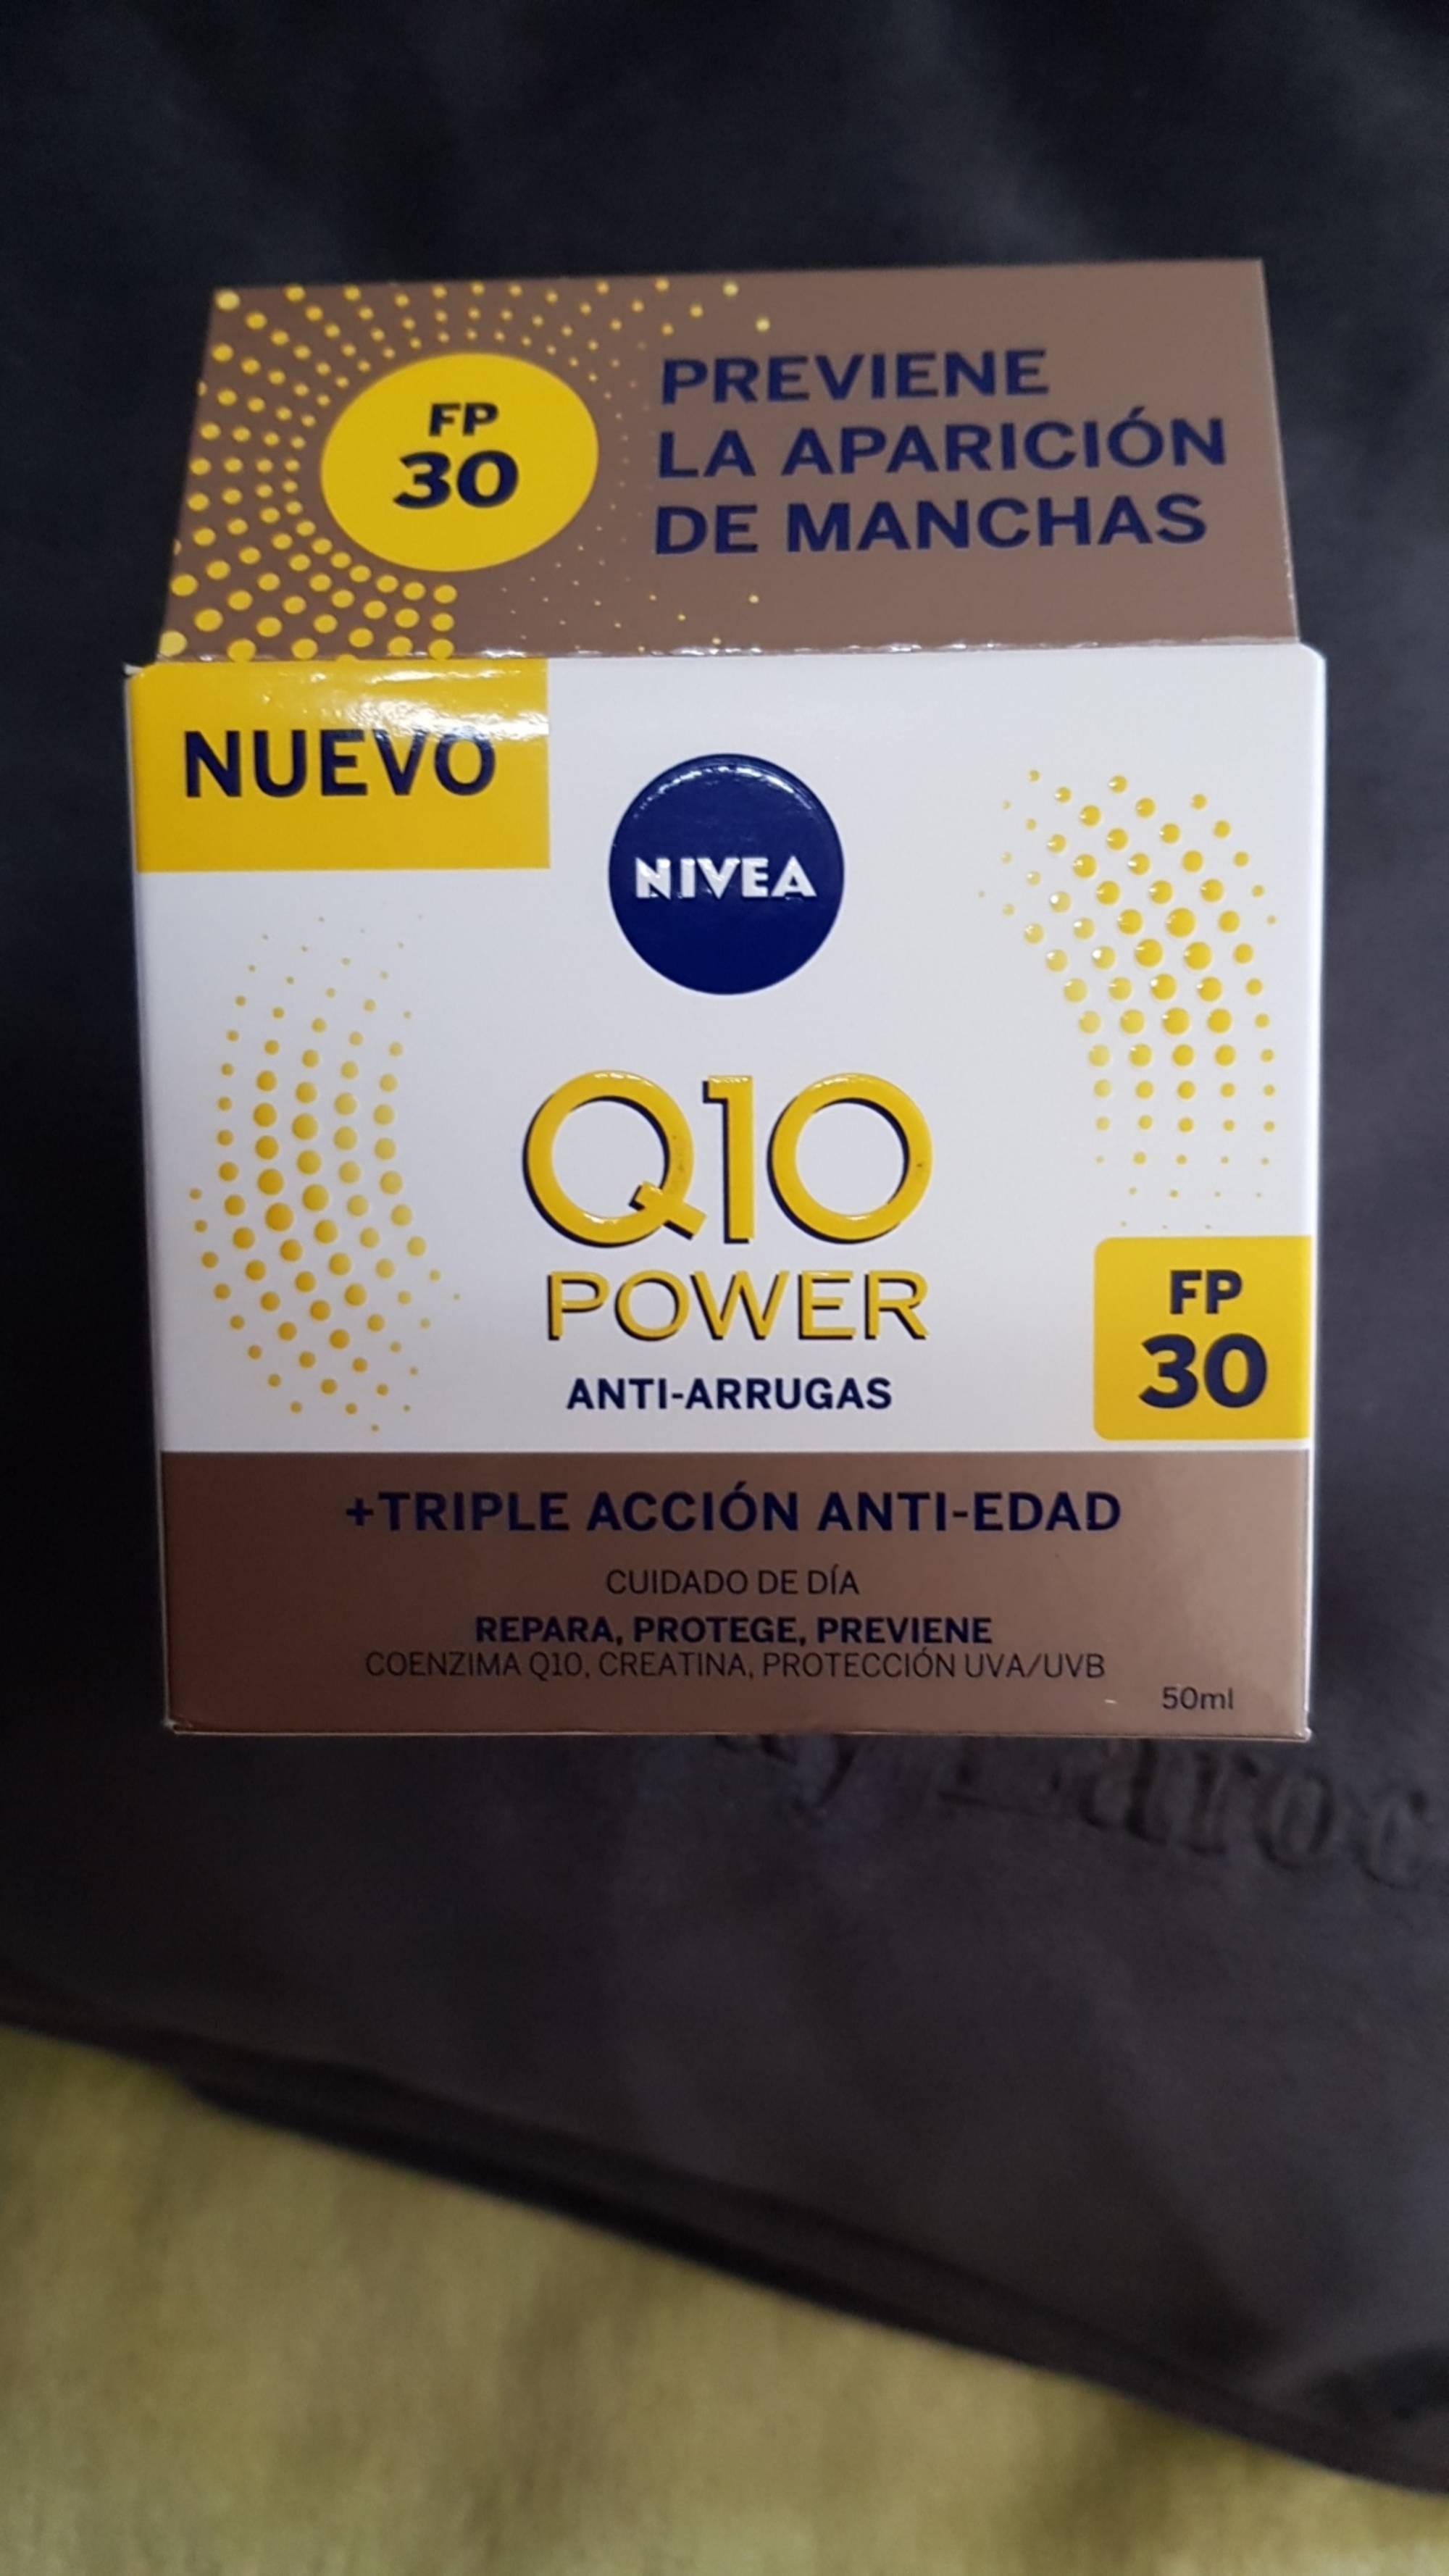 NIVEA - Q10 power Anti-arrugas FP 30